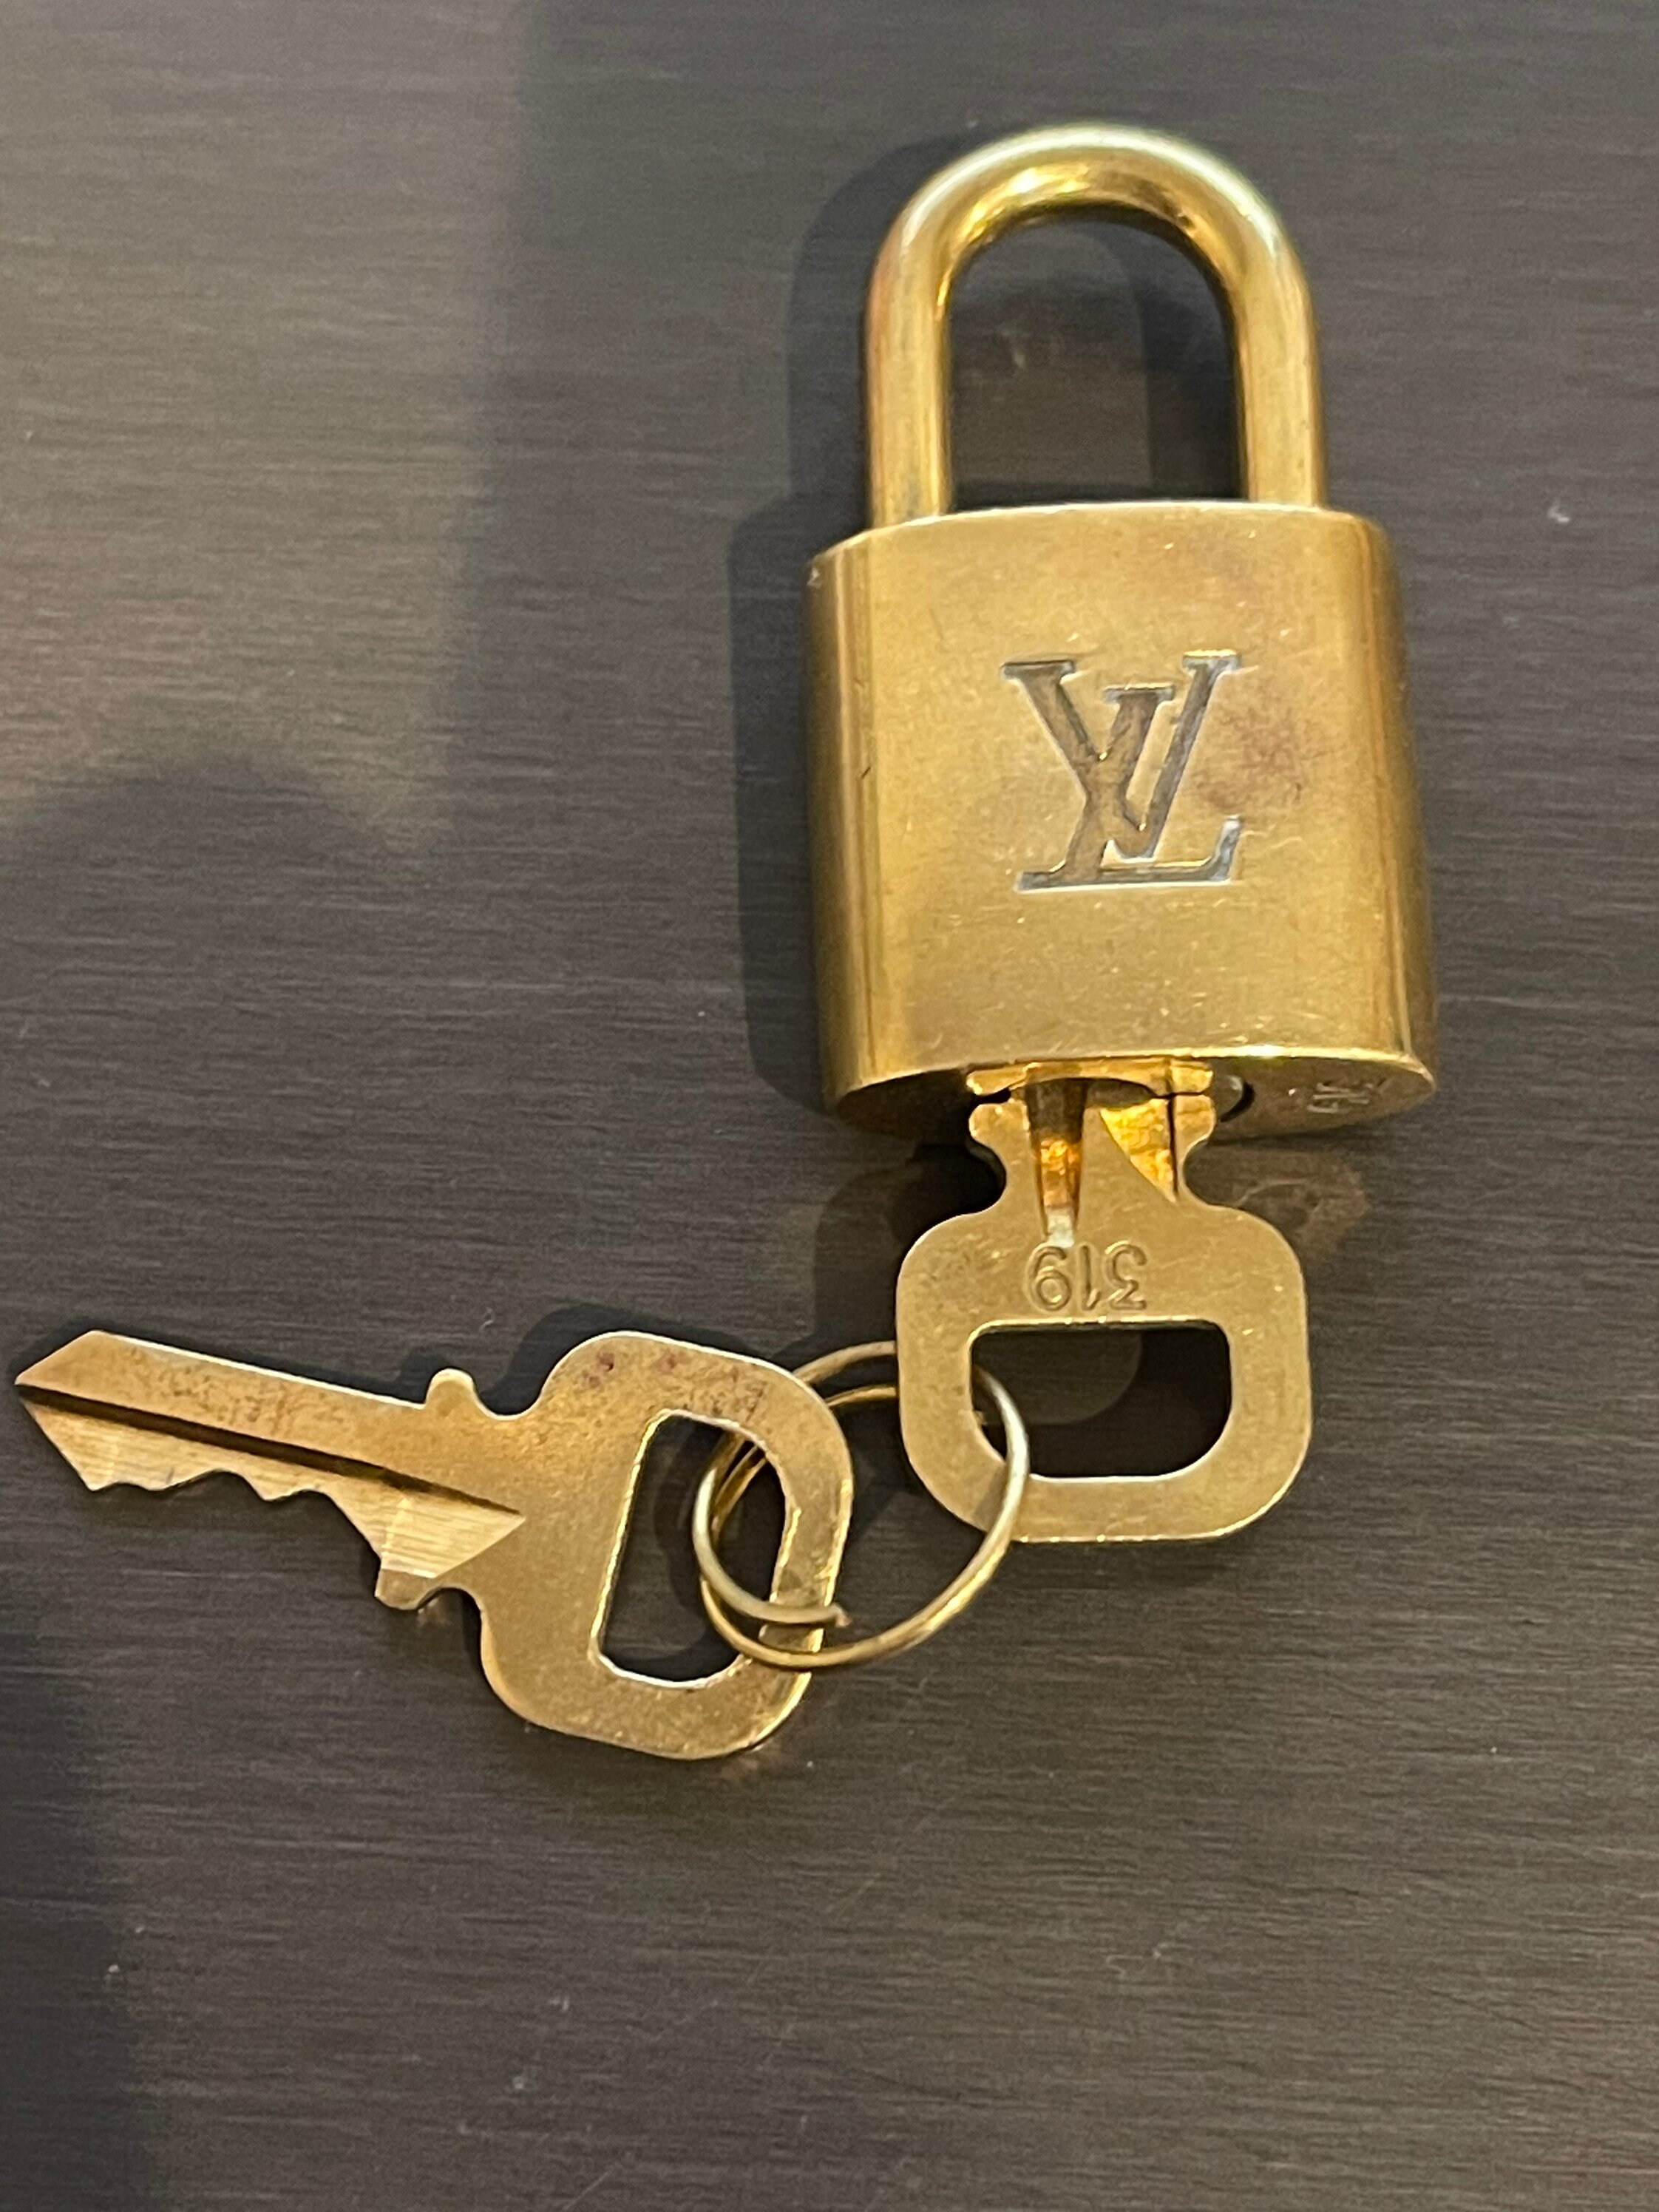 Louis Vuitton Padlock and NO KEY 302 306 321 and 300 Lock 